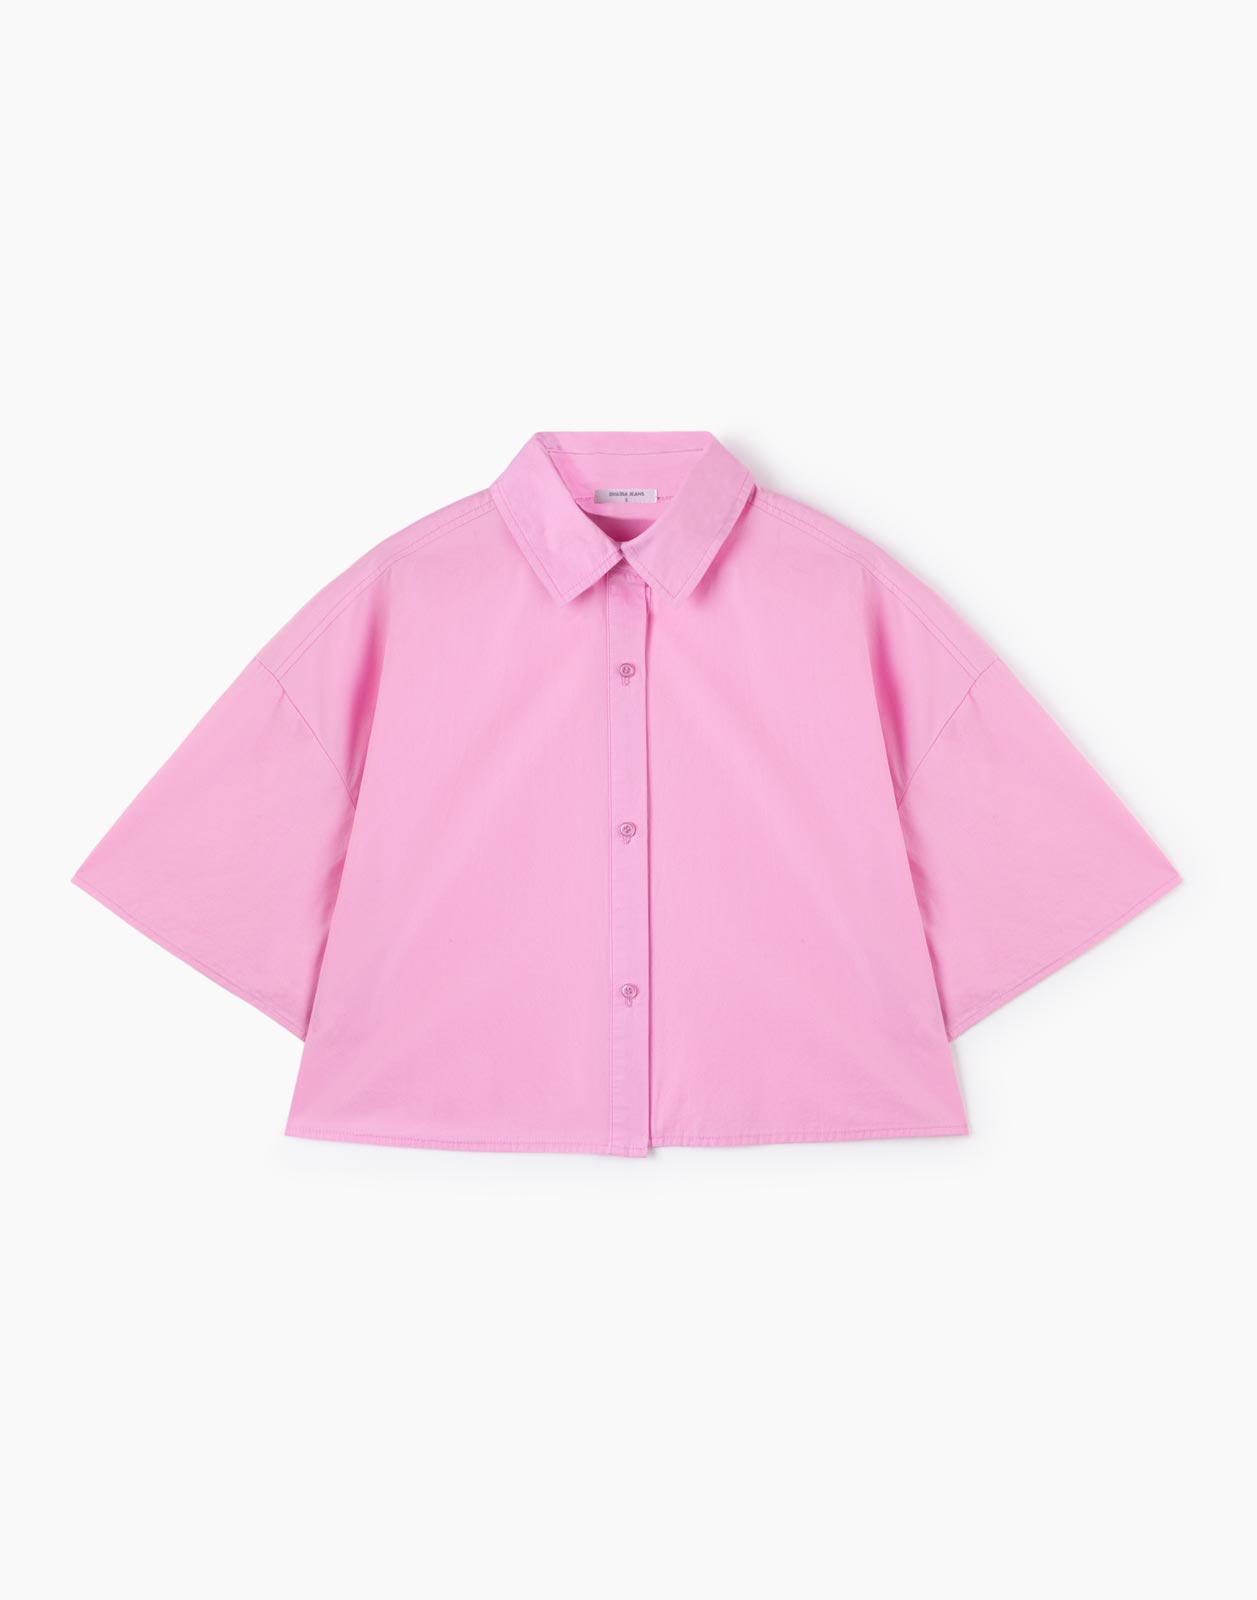 Рубашка женская Gloria Jeans GWT003024 розовая M